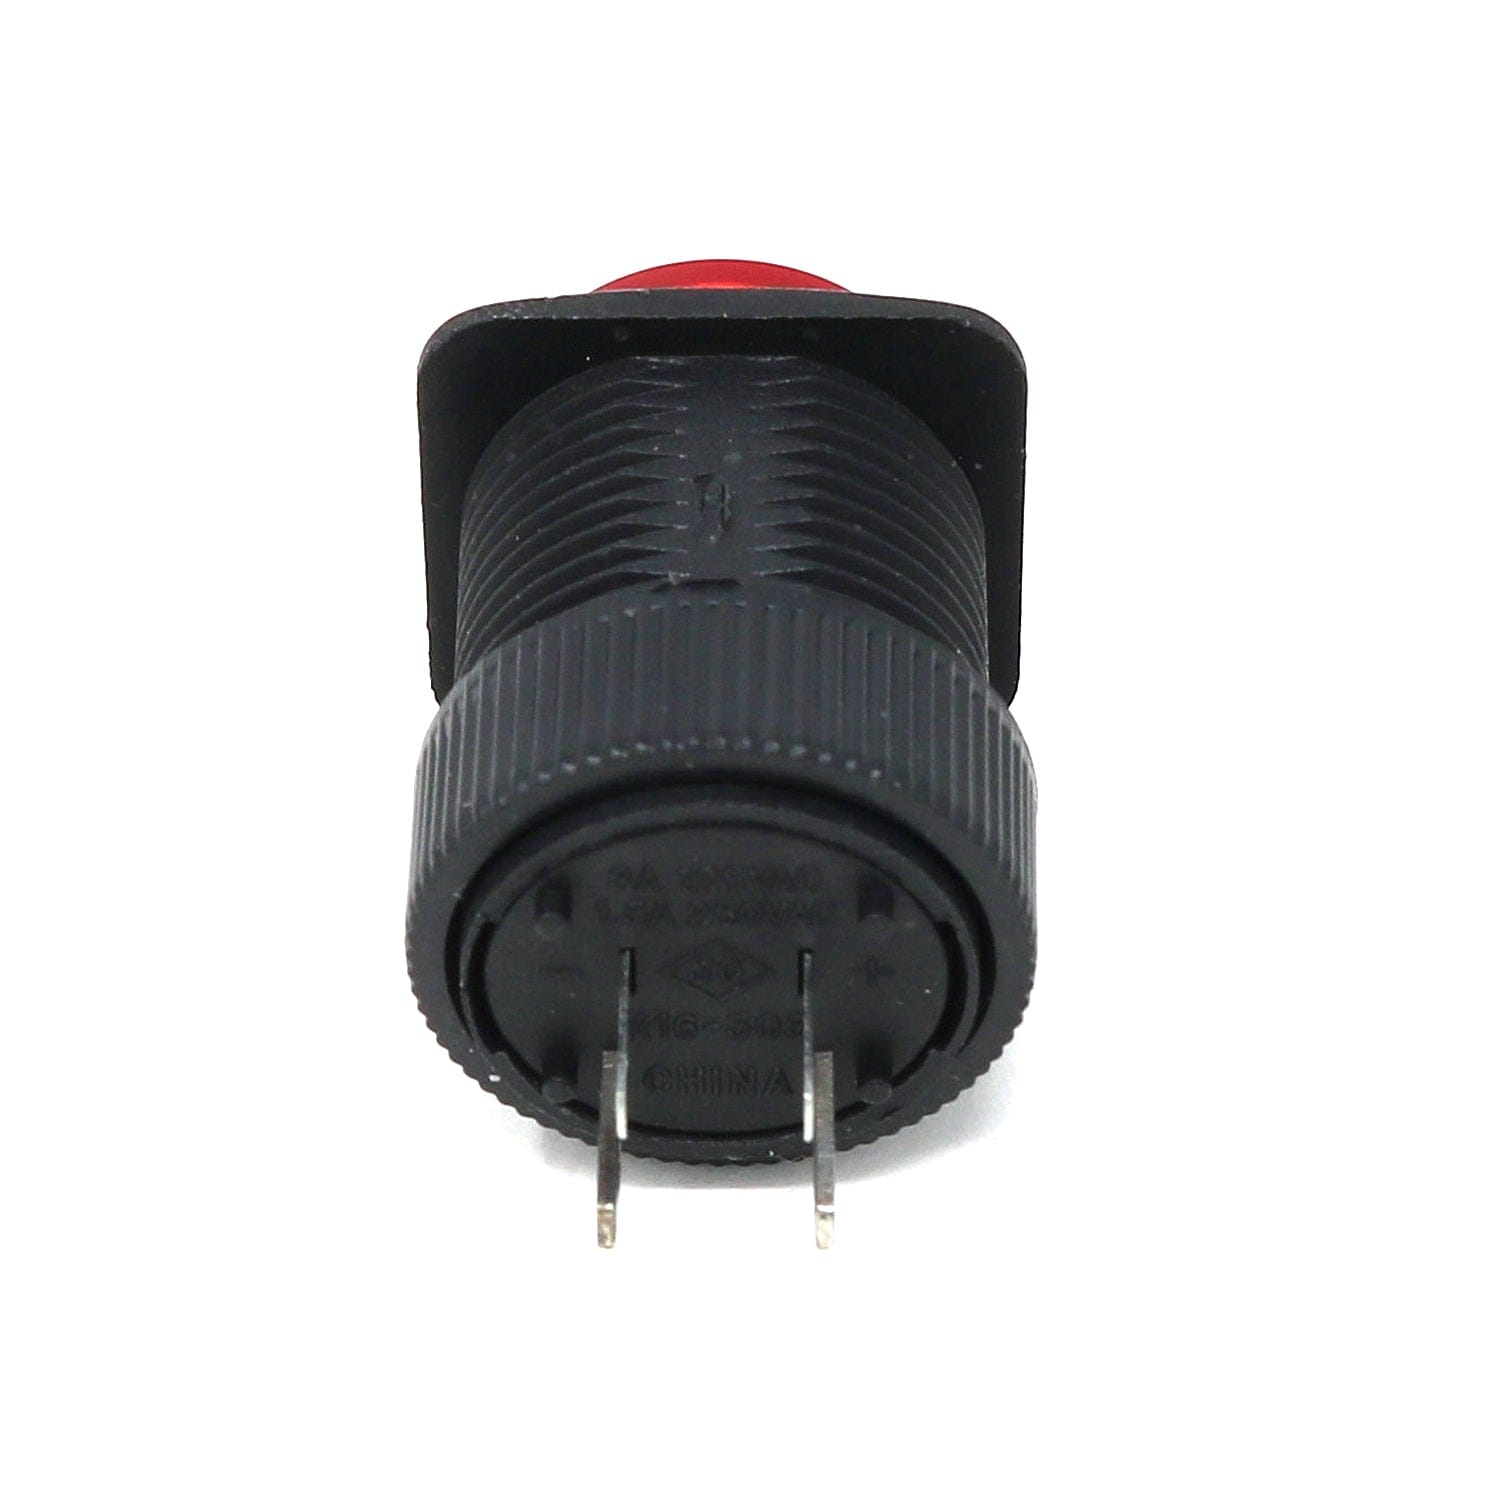 16mm Illuminated Pushbutton - Red Latching On/Off Switch - The Pi Hut